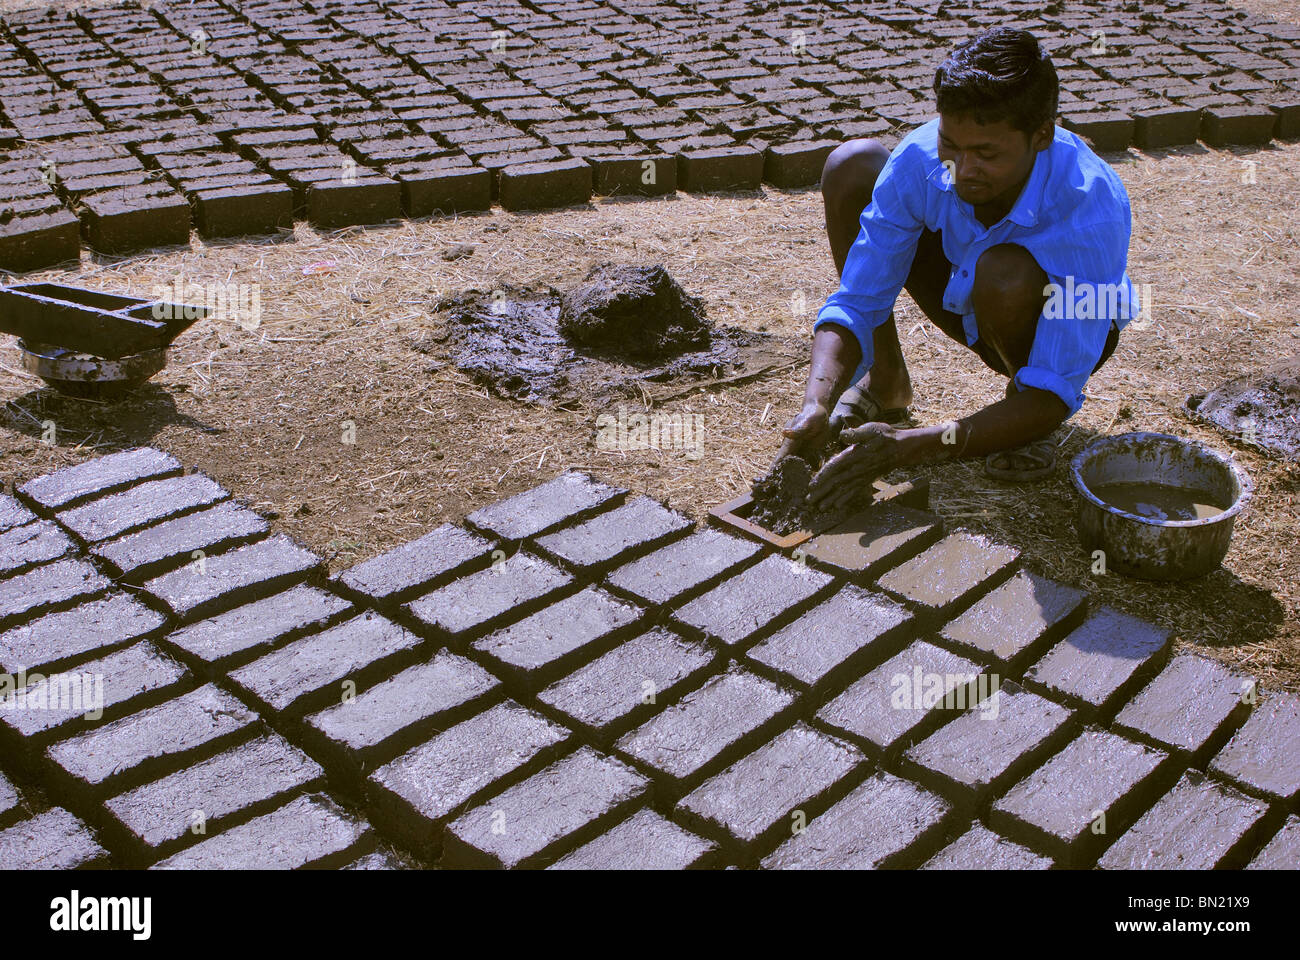 Making bricks, Potalpani village, Madhya Pradesh, INDIA Stock Photo